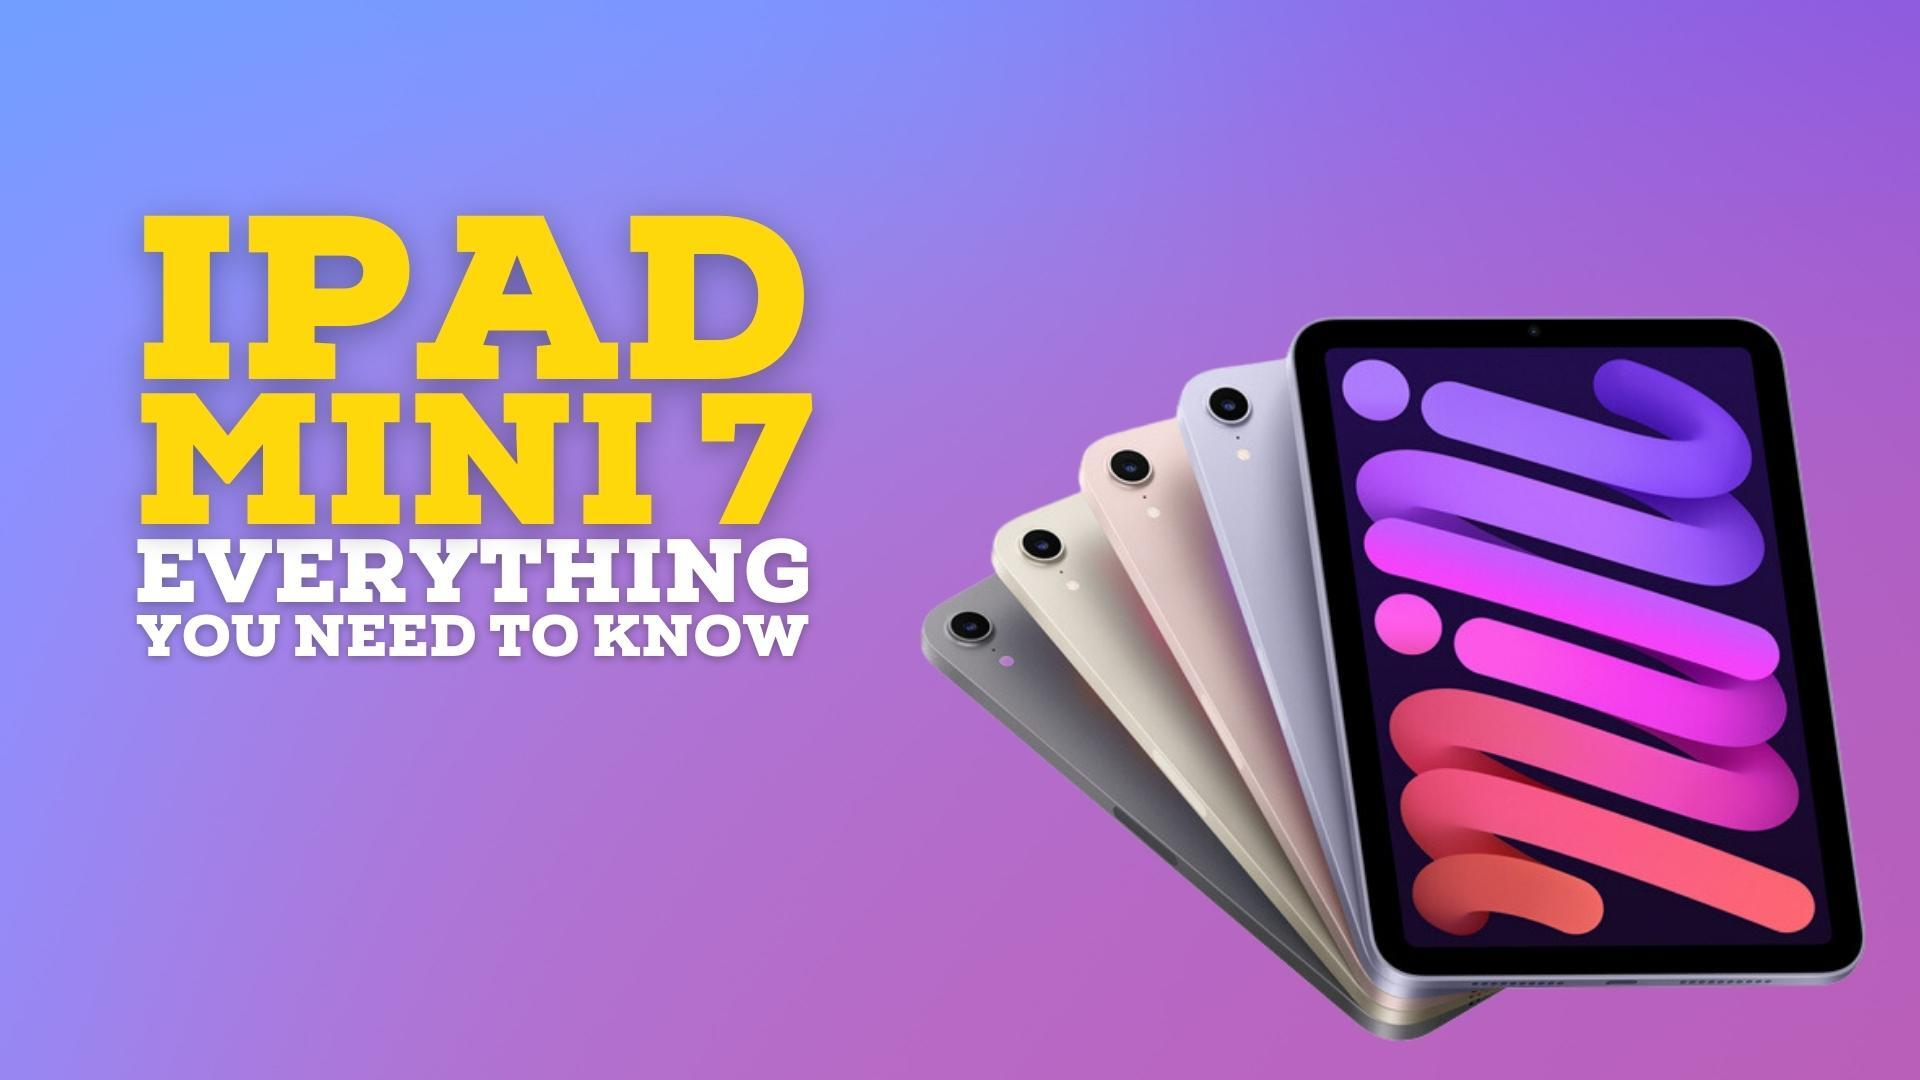 iPad mini 7 rumors: Everything you need to know